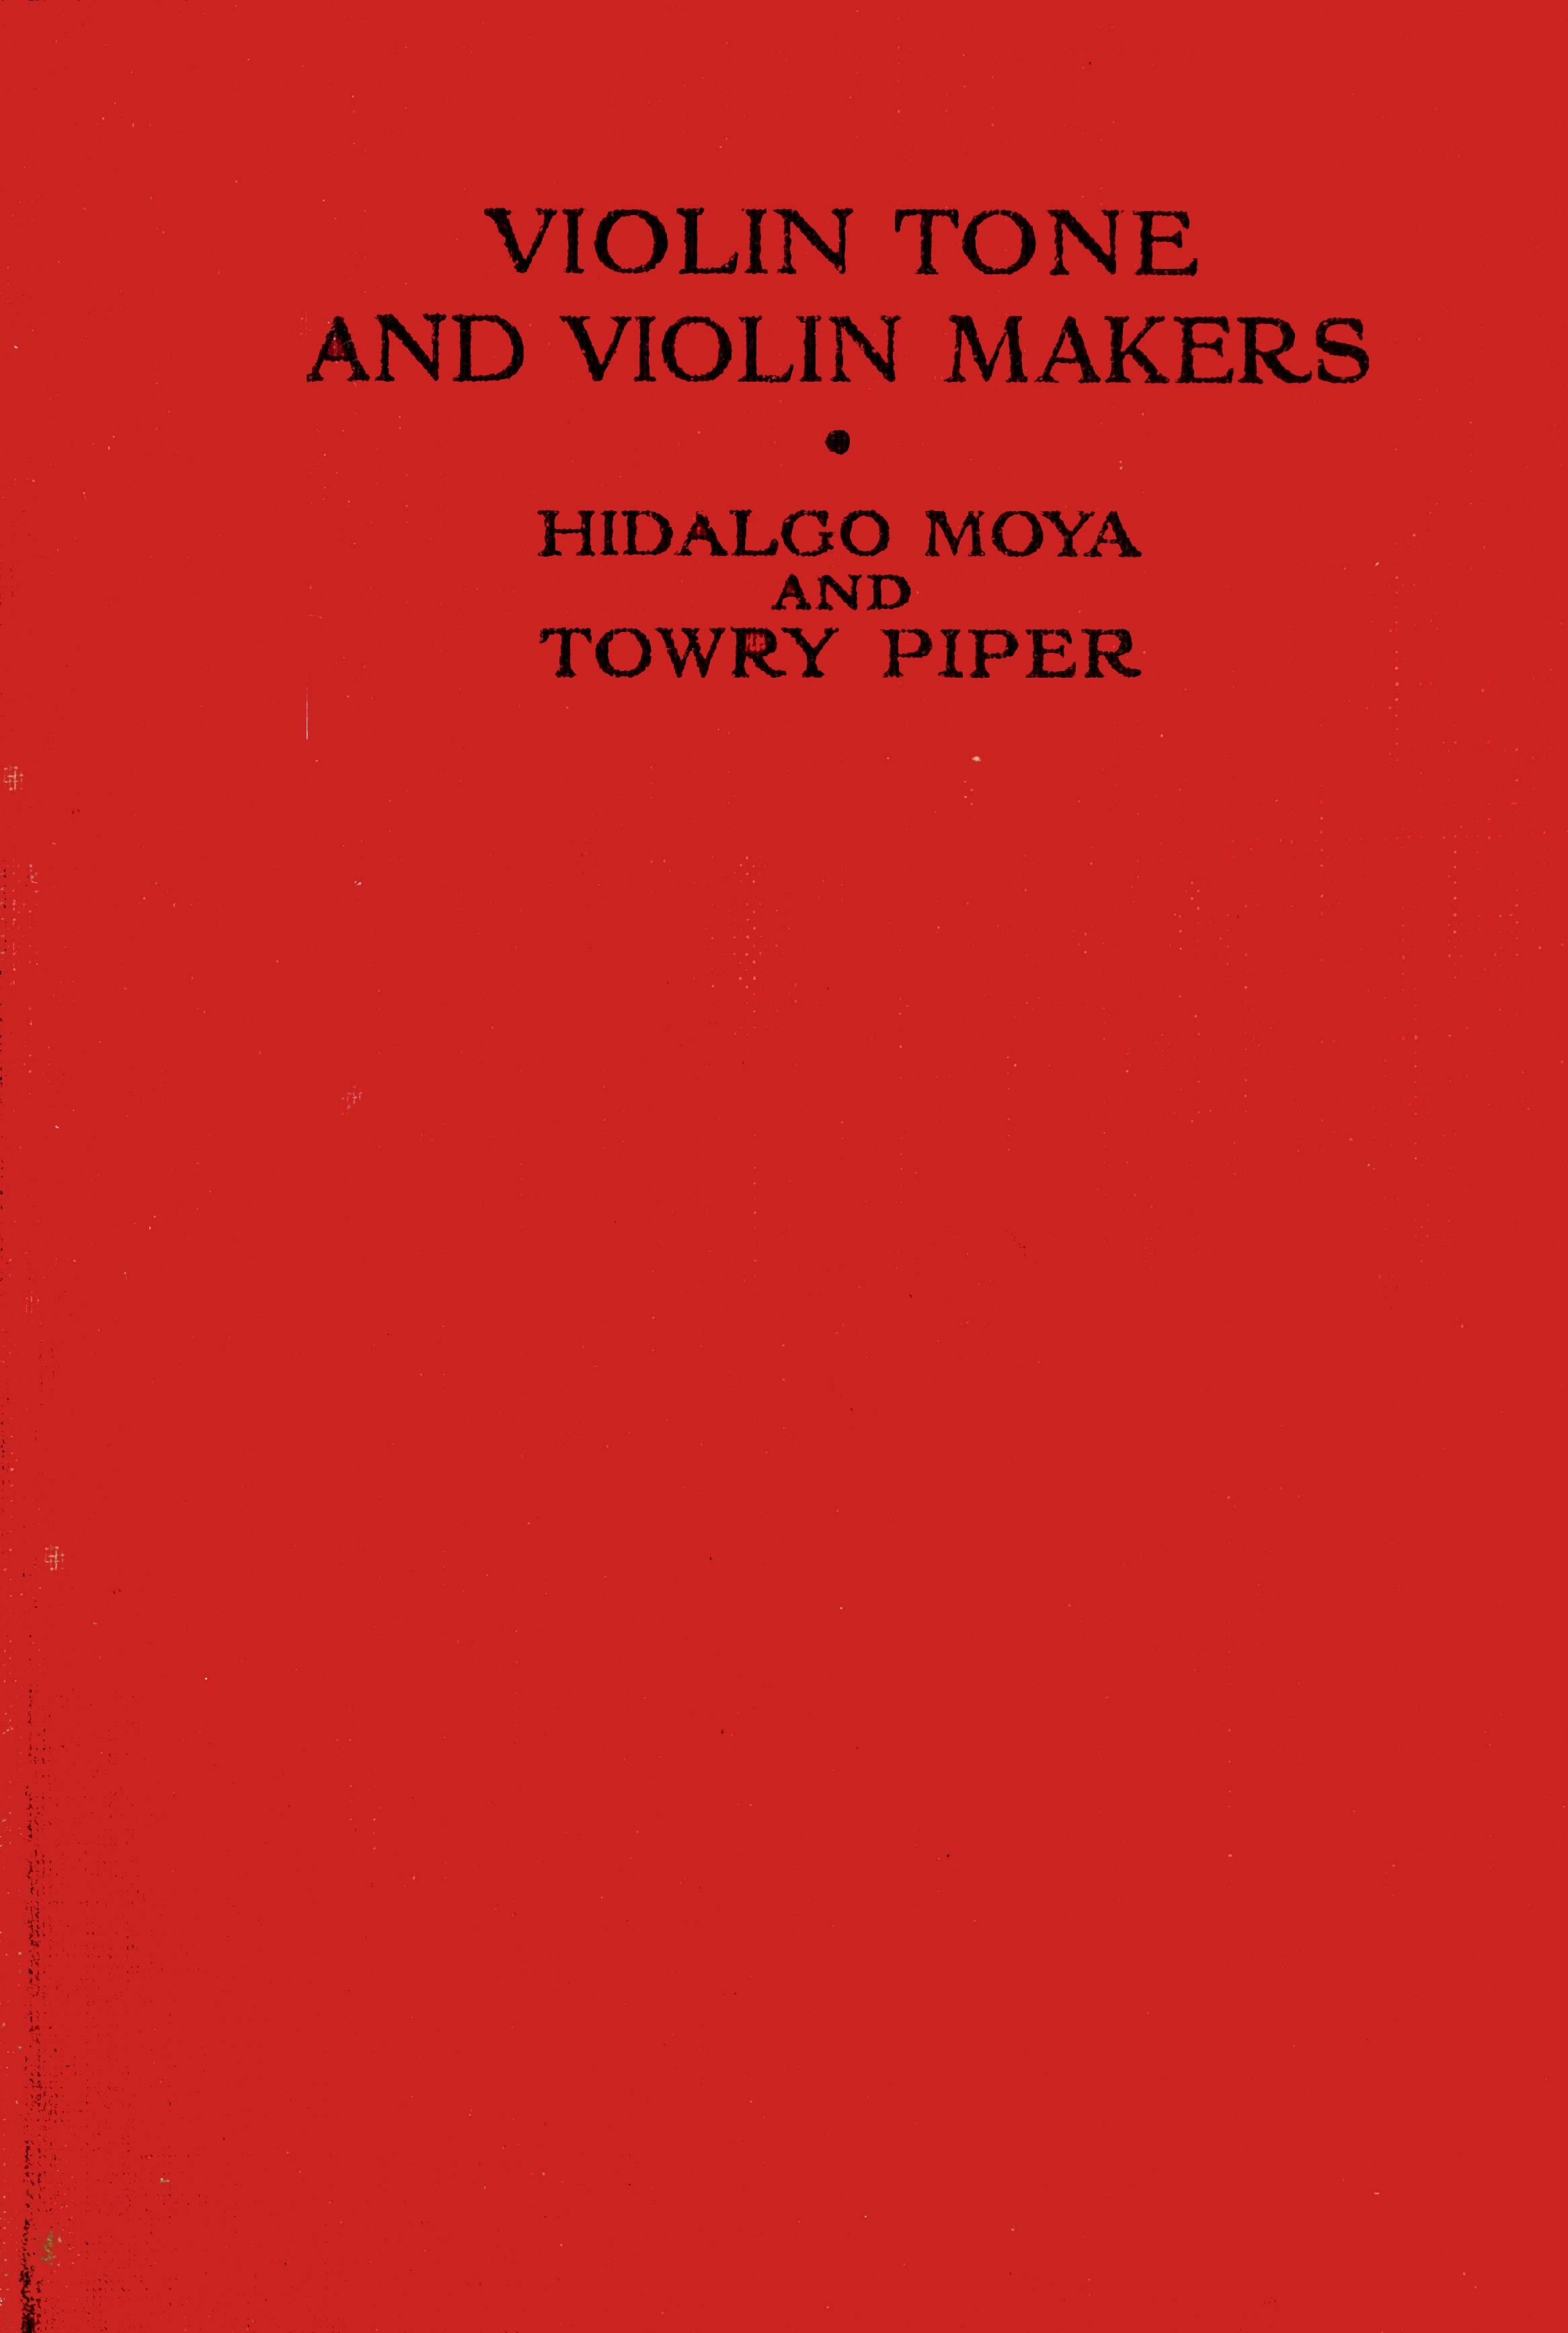 The Project Gutenberg eBook of Violin tone and violin makers, by Hidalgo  Moya.